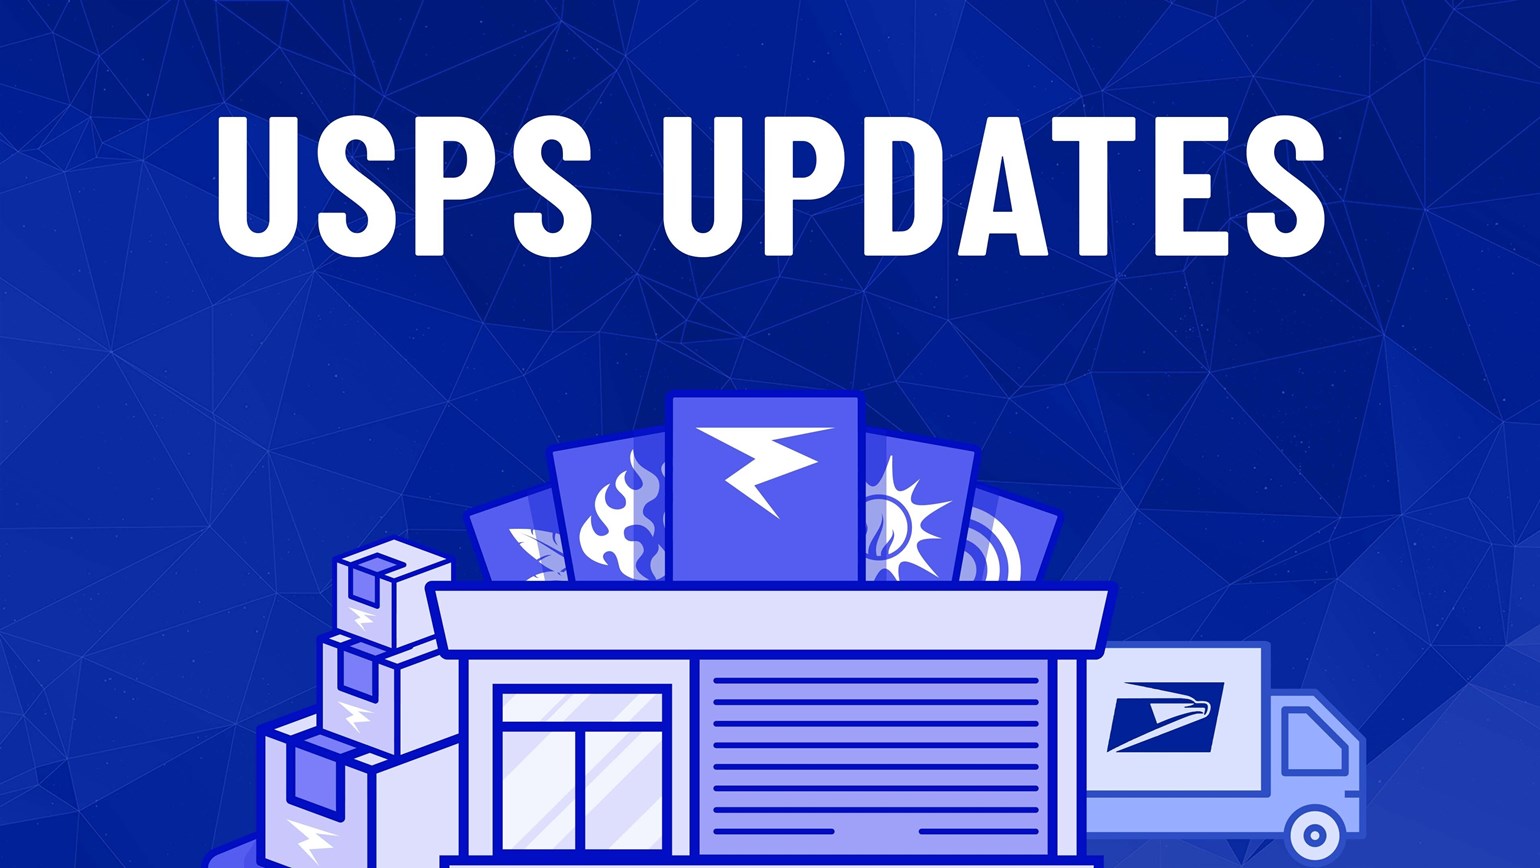 USPS International Updates